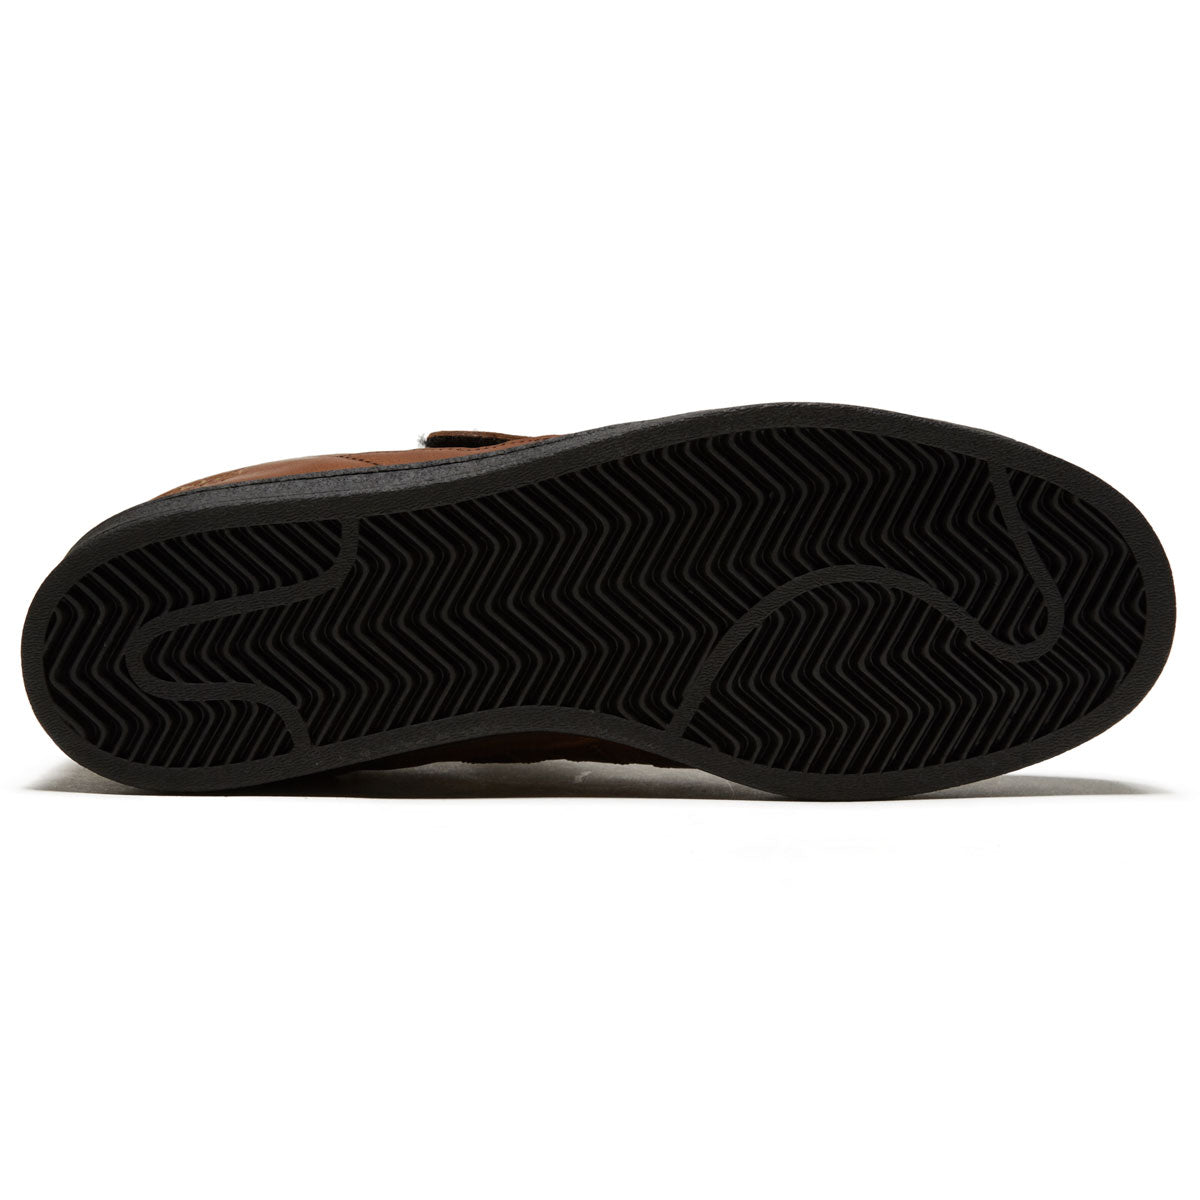 Adidas Pro Shell ADV x Heitor Shoes - Core Black/Core Black/Core Black image 4